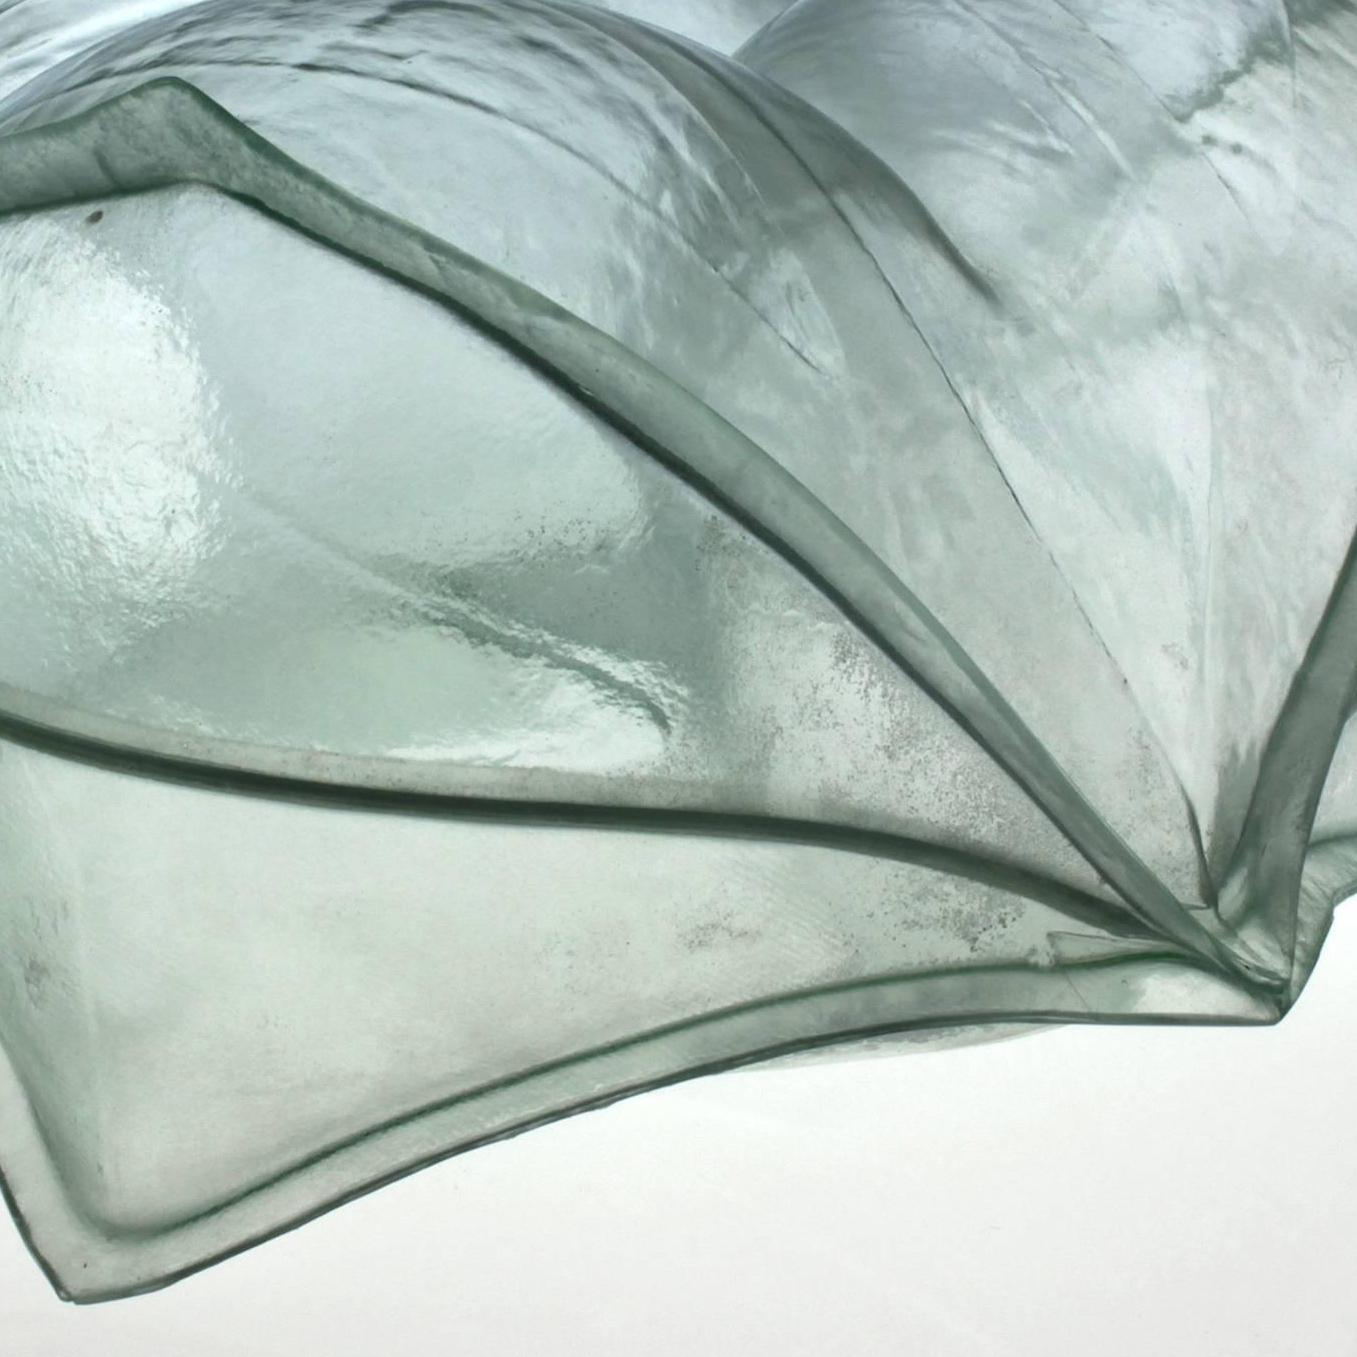 Matthew Szösz
untitled (inflatable) no. 82
2018
glass
15.50 x 8.25 x 15.50 in


